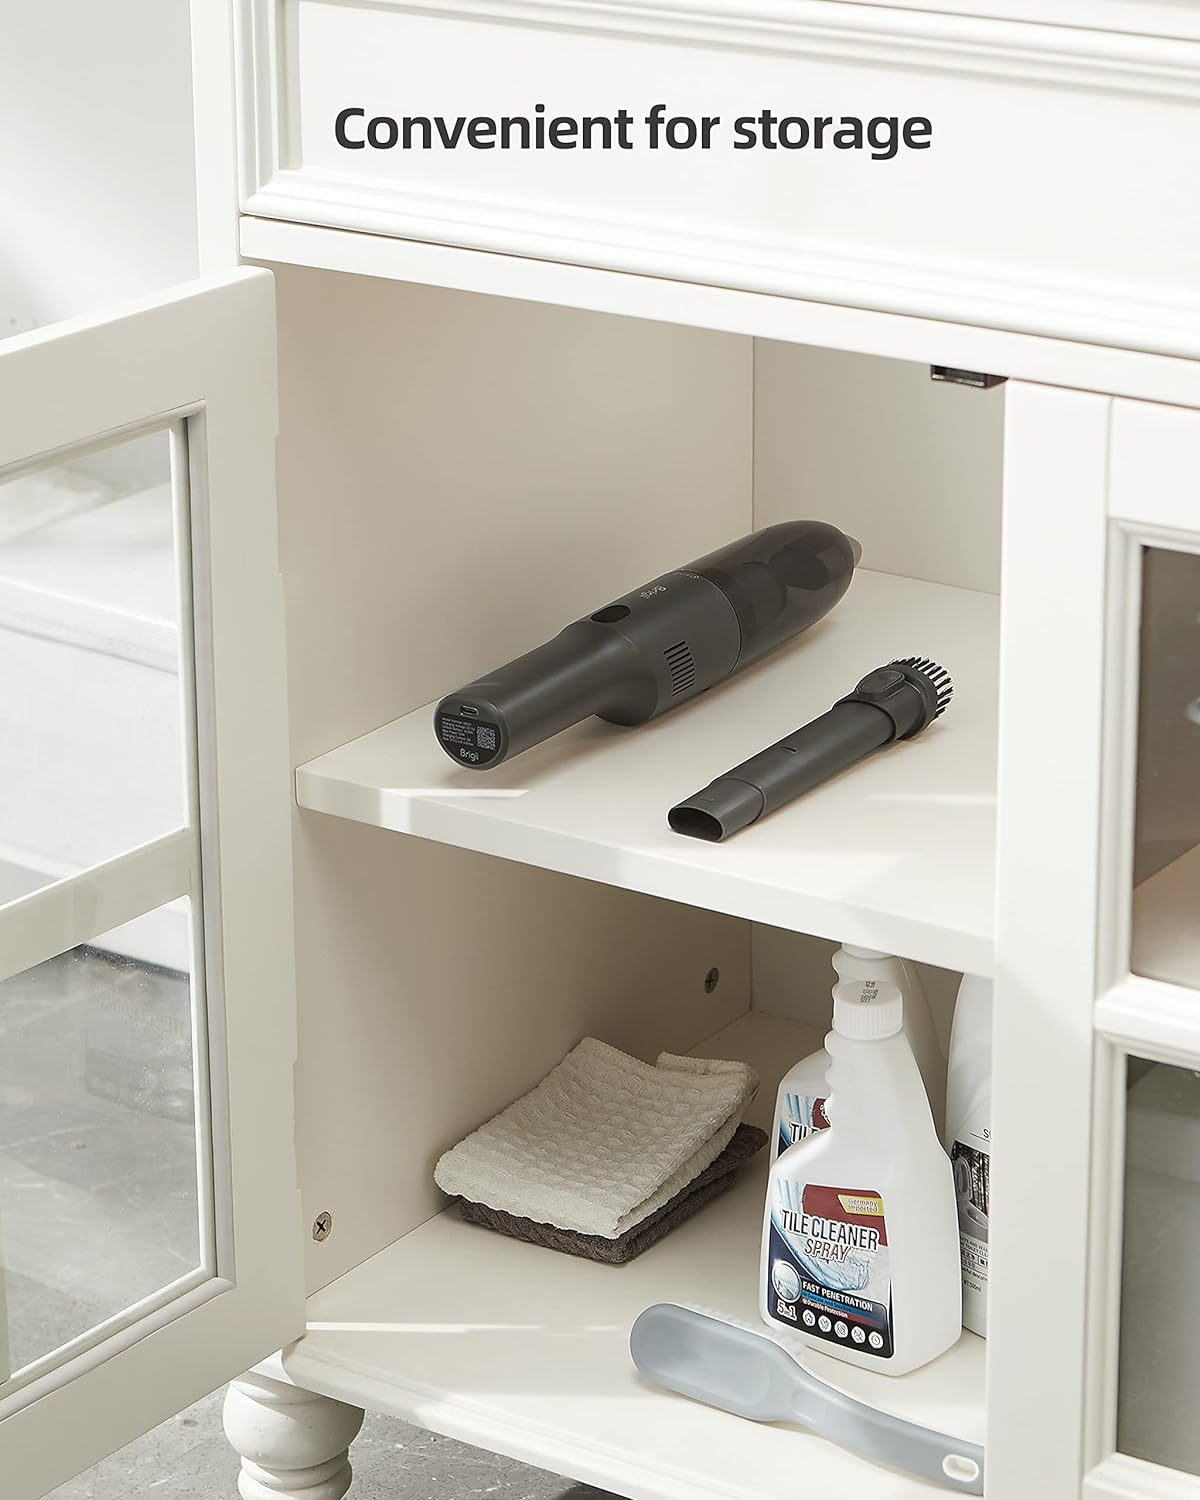 Brigii Handheld Vacuum Cleaner; 9kPa Mini Vacuum; Cordless Car Vacuum Cleaner for Home,Office,Keyboard,Crevice,Desk;USB-C Rechargeable-MX20